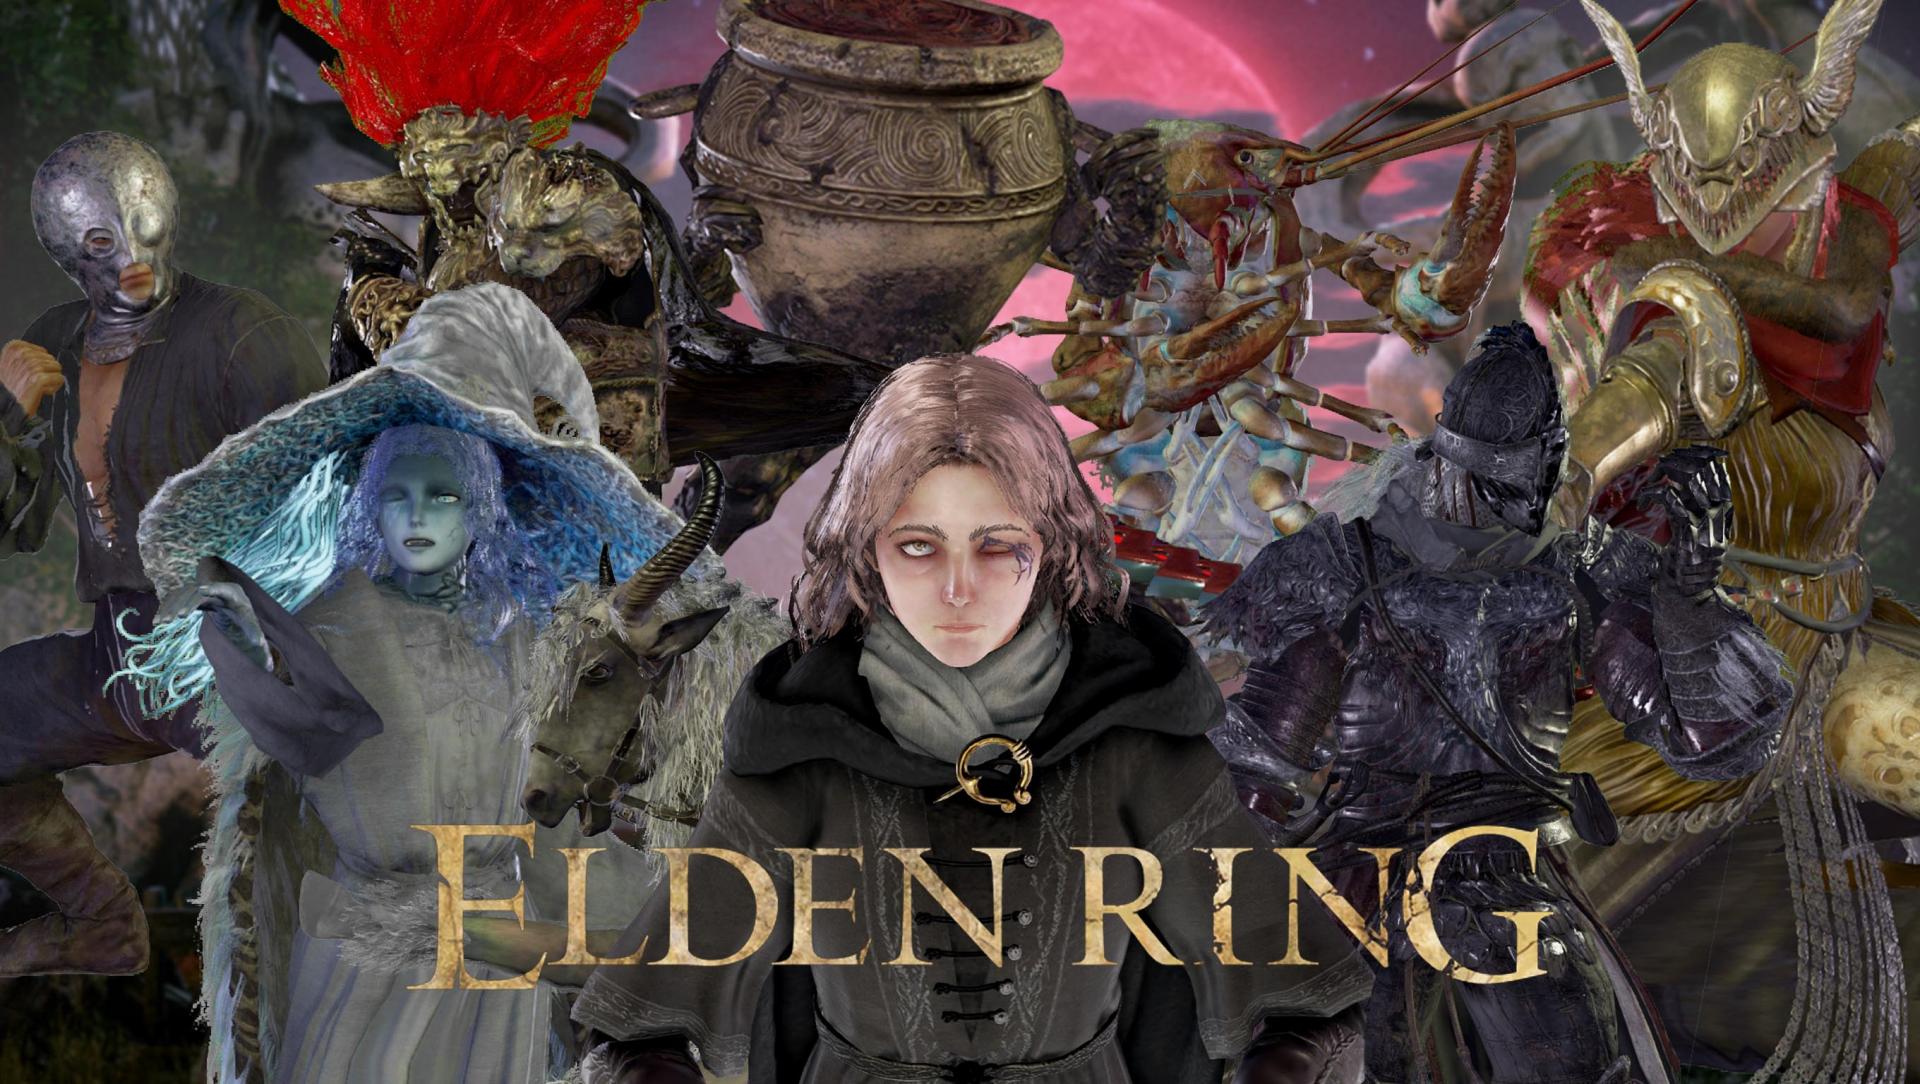 The Ultimate Elden Ring Modpack